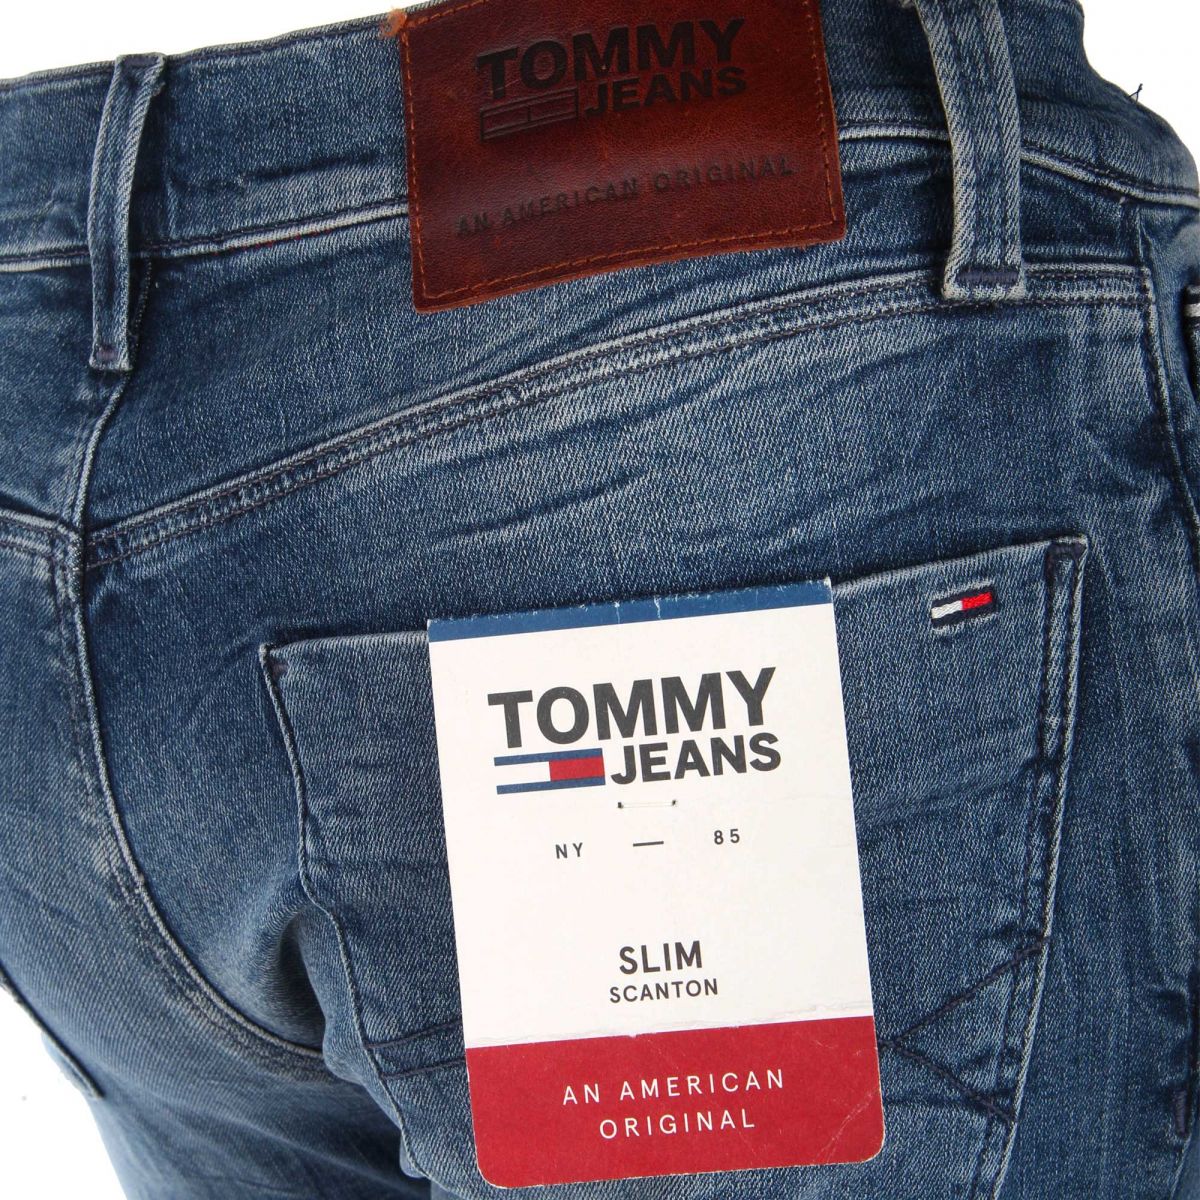 tommy hilfiger 85 jeans